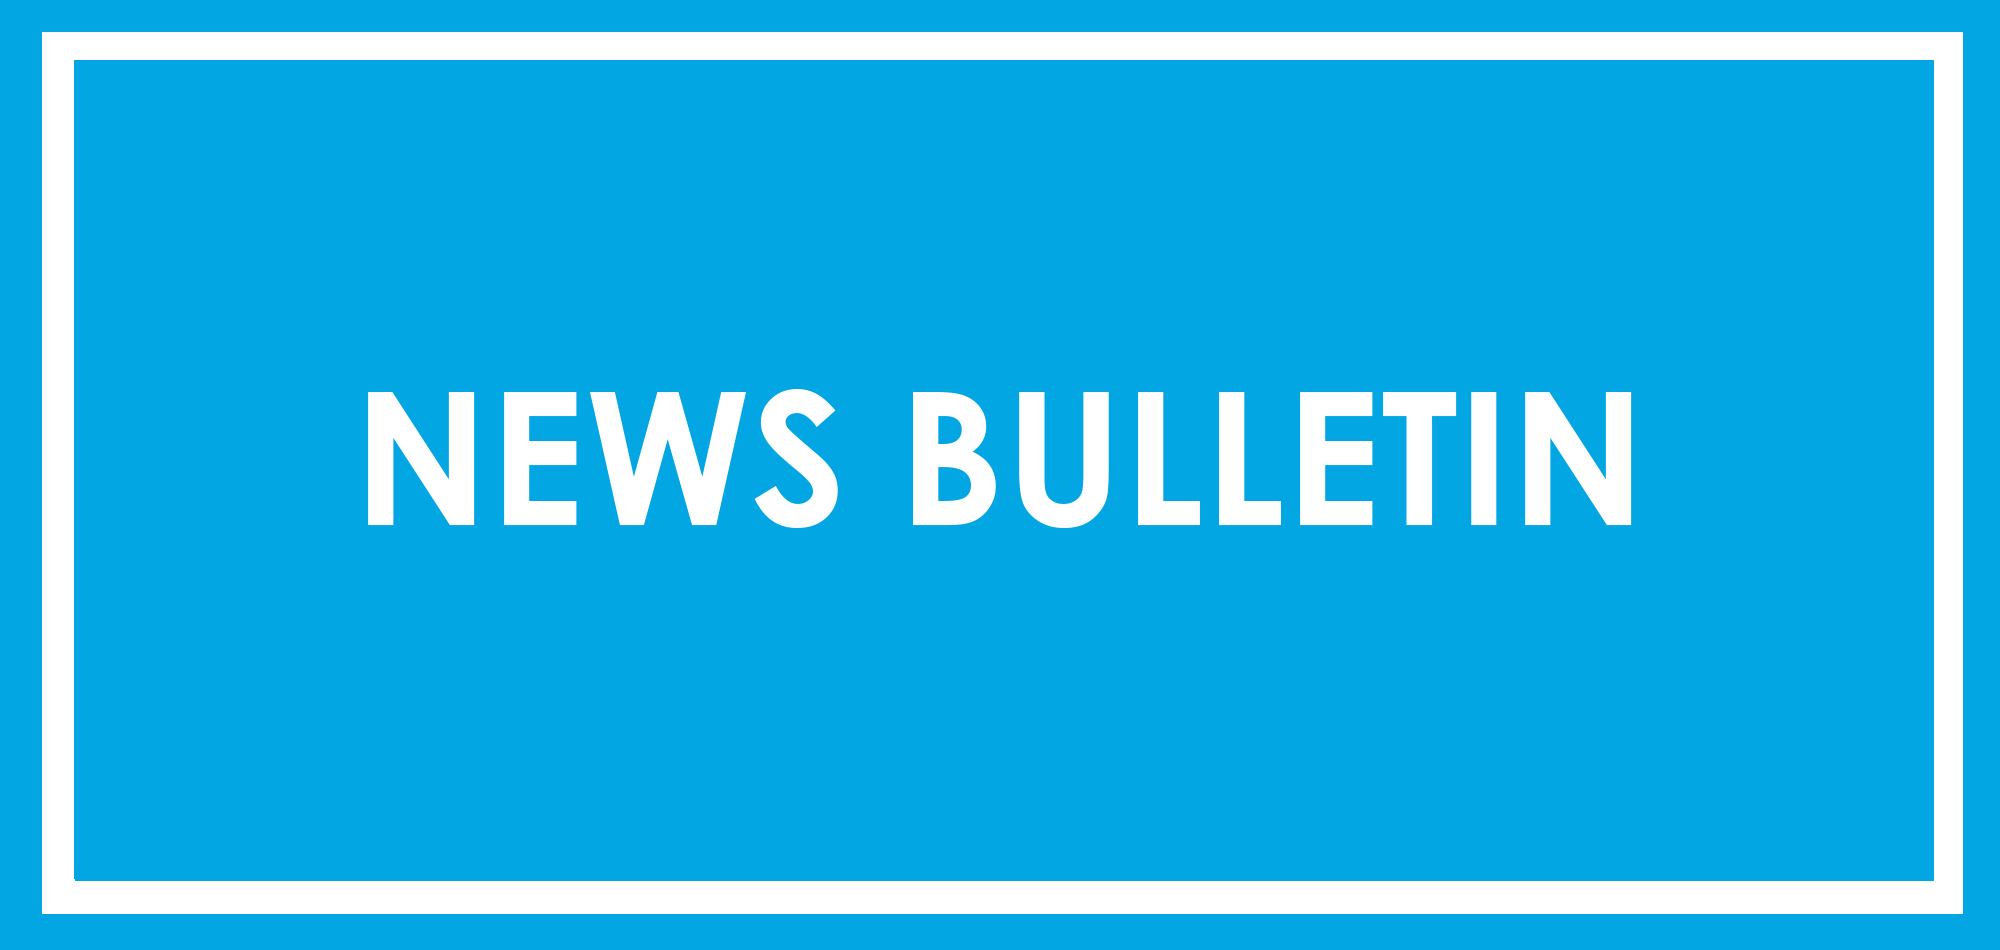 News Bulletin - 23.11.2020